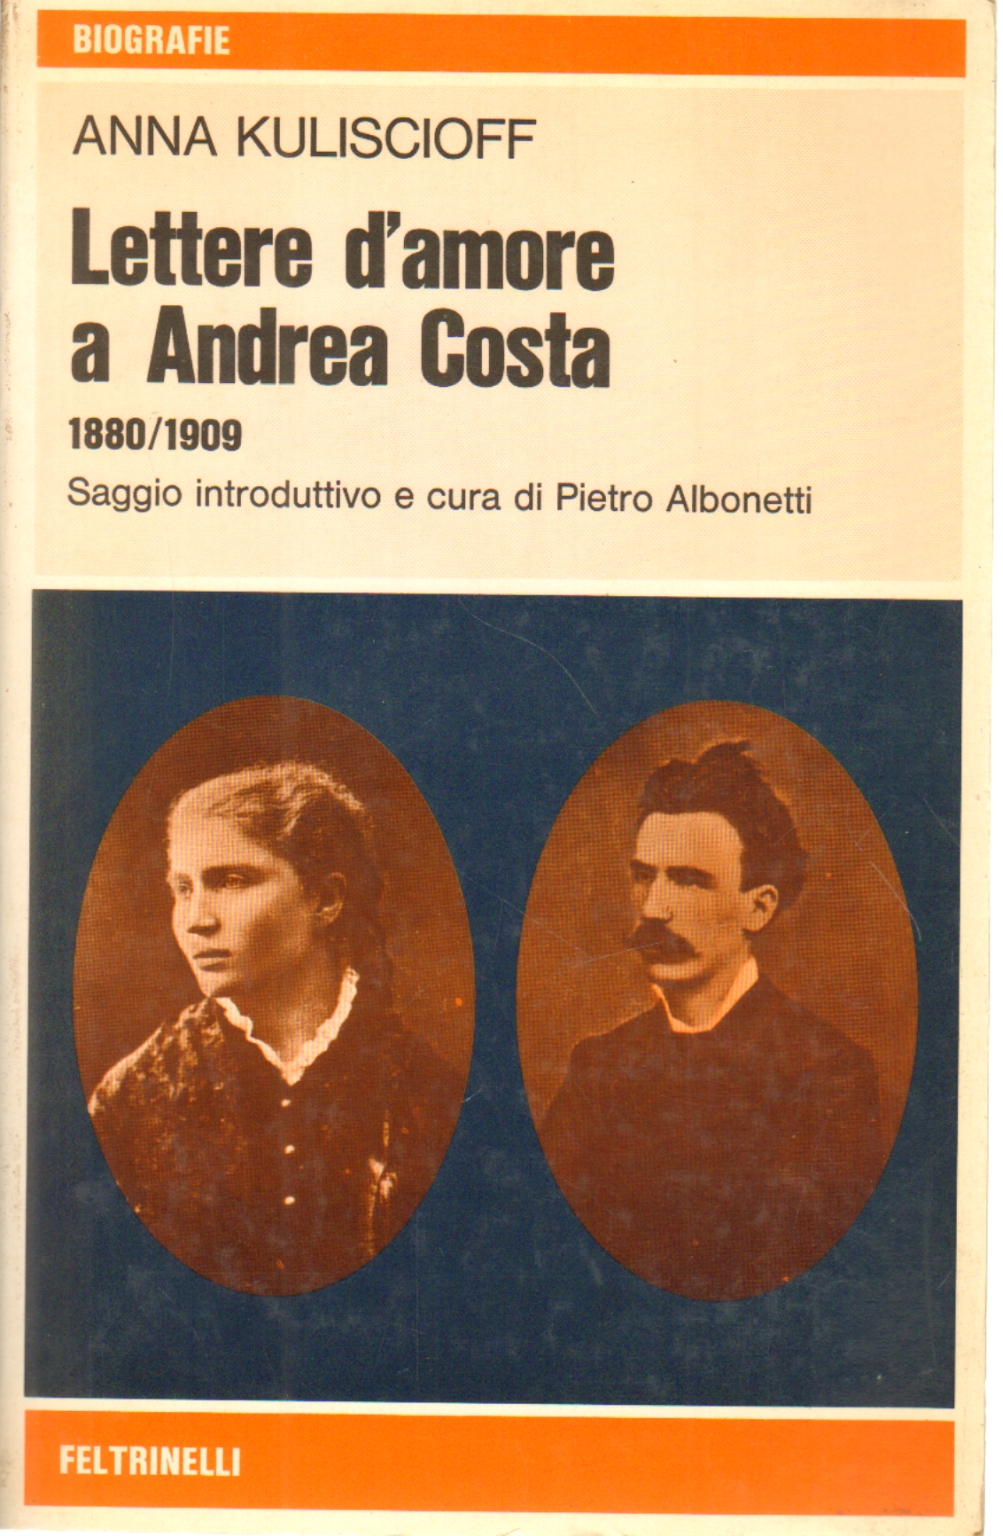 Love letters to Andrea Costa